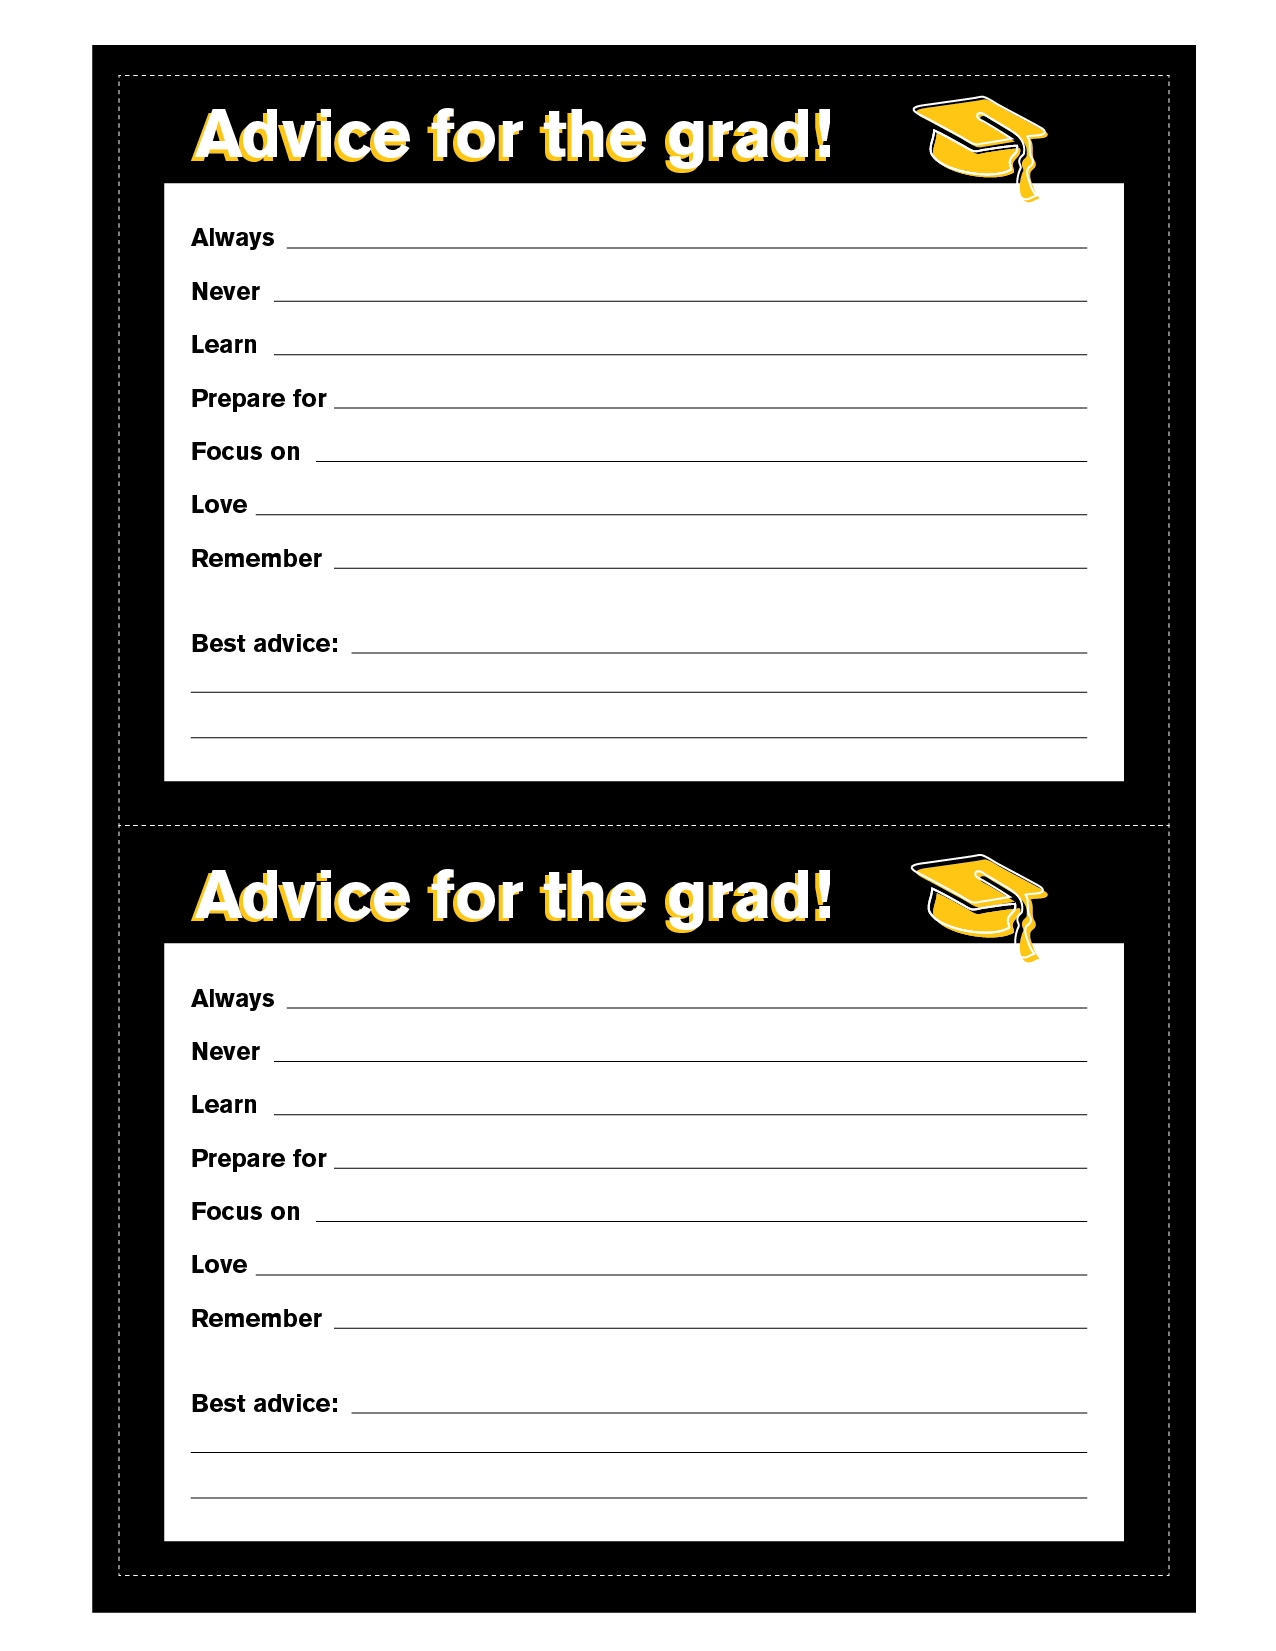 Black advice for the grad card